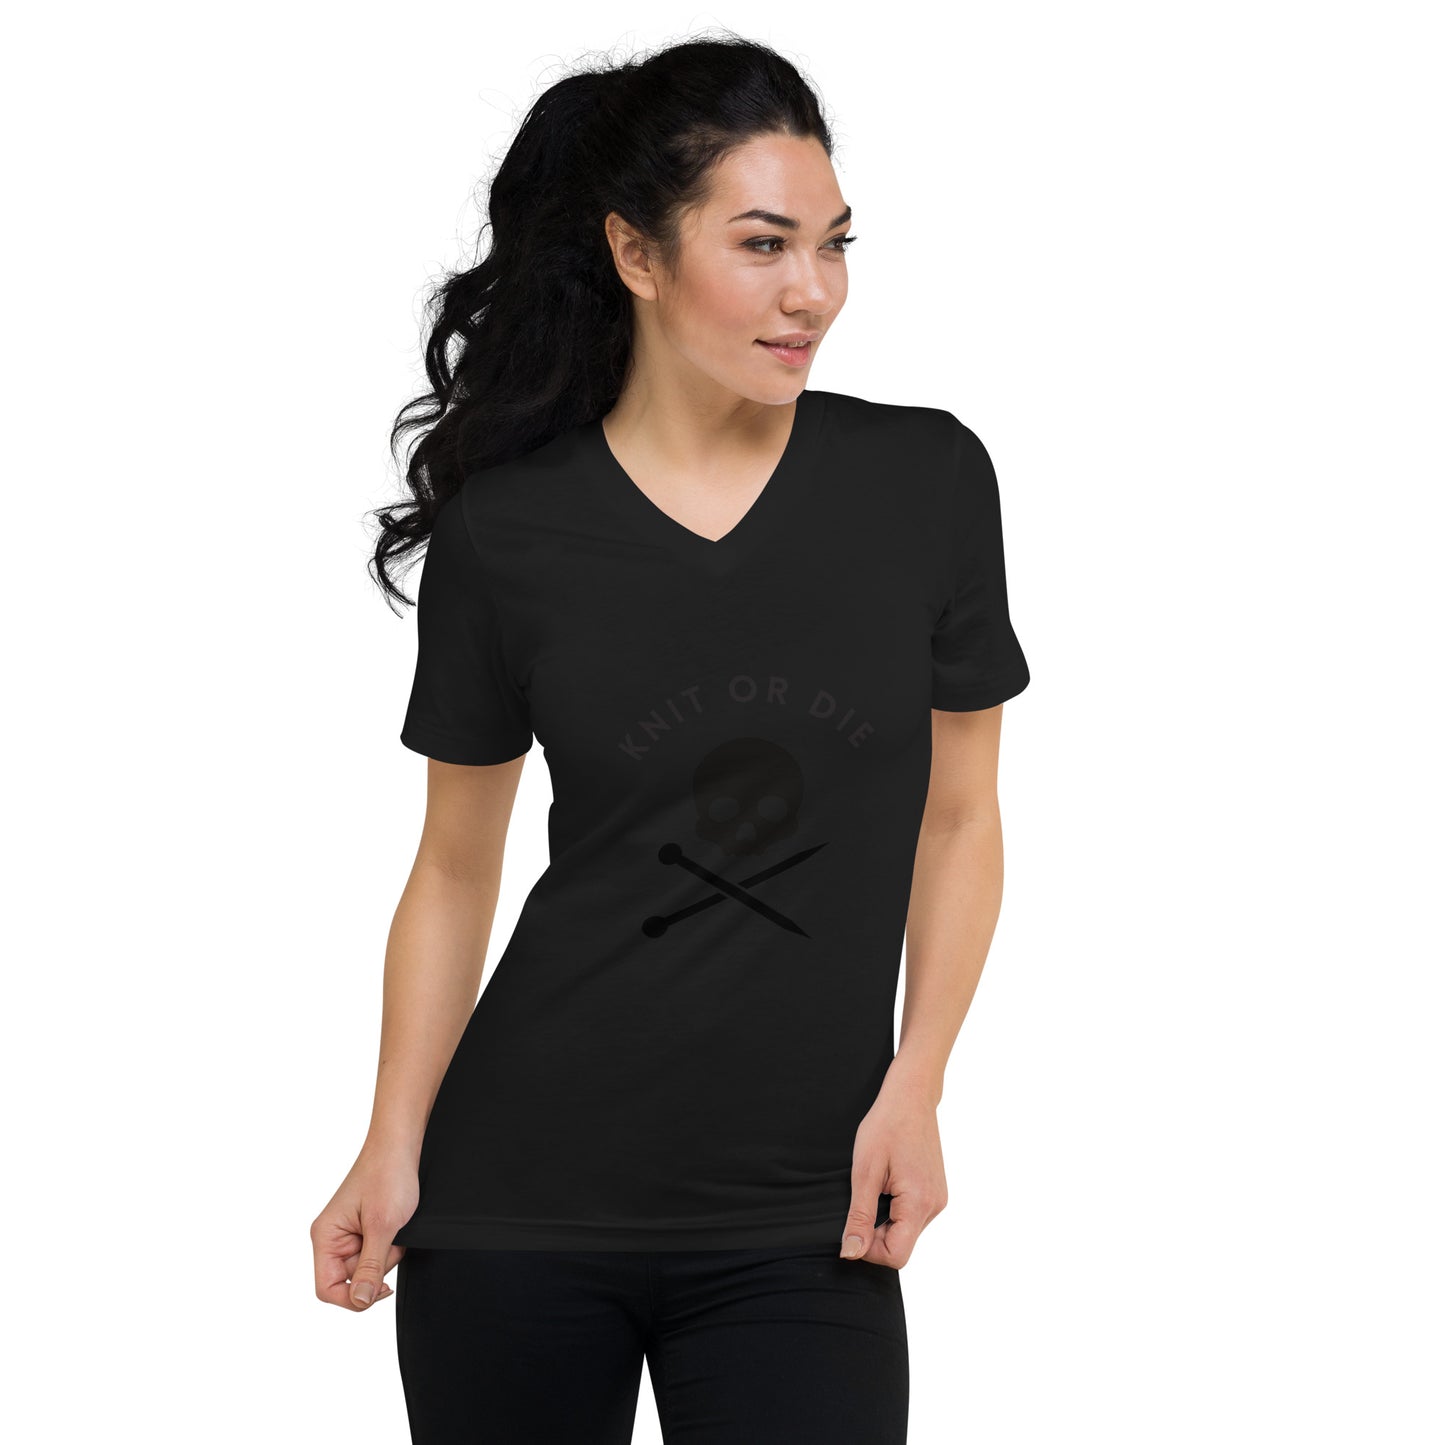 Knit or Die Unisex Short Sleeve V-Neck T-Shirt